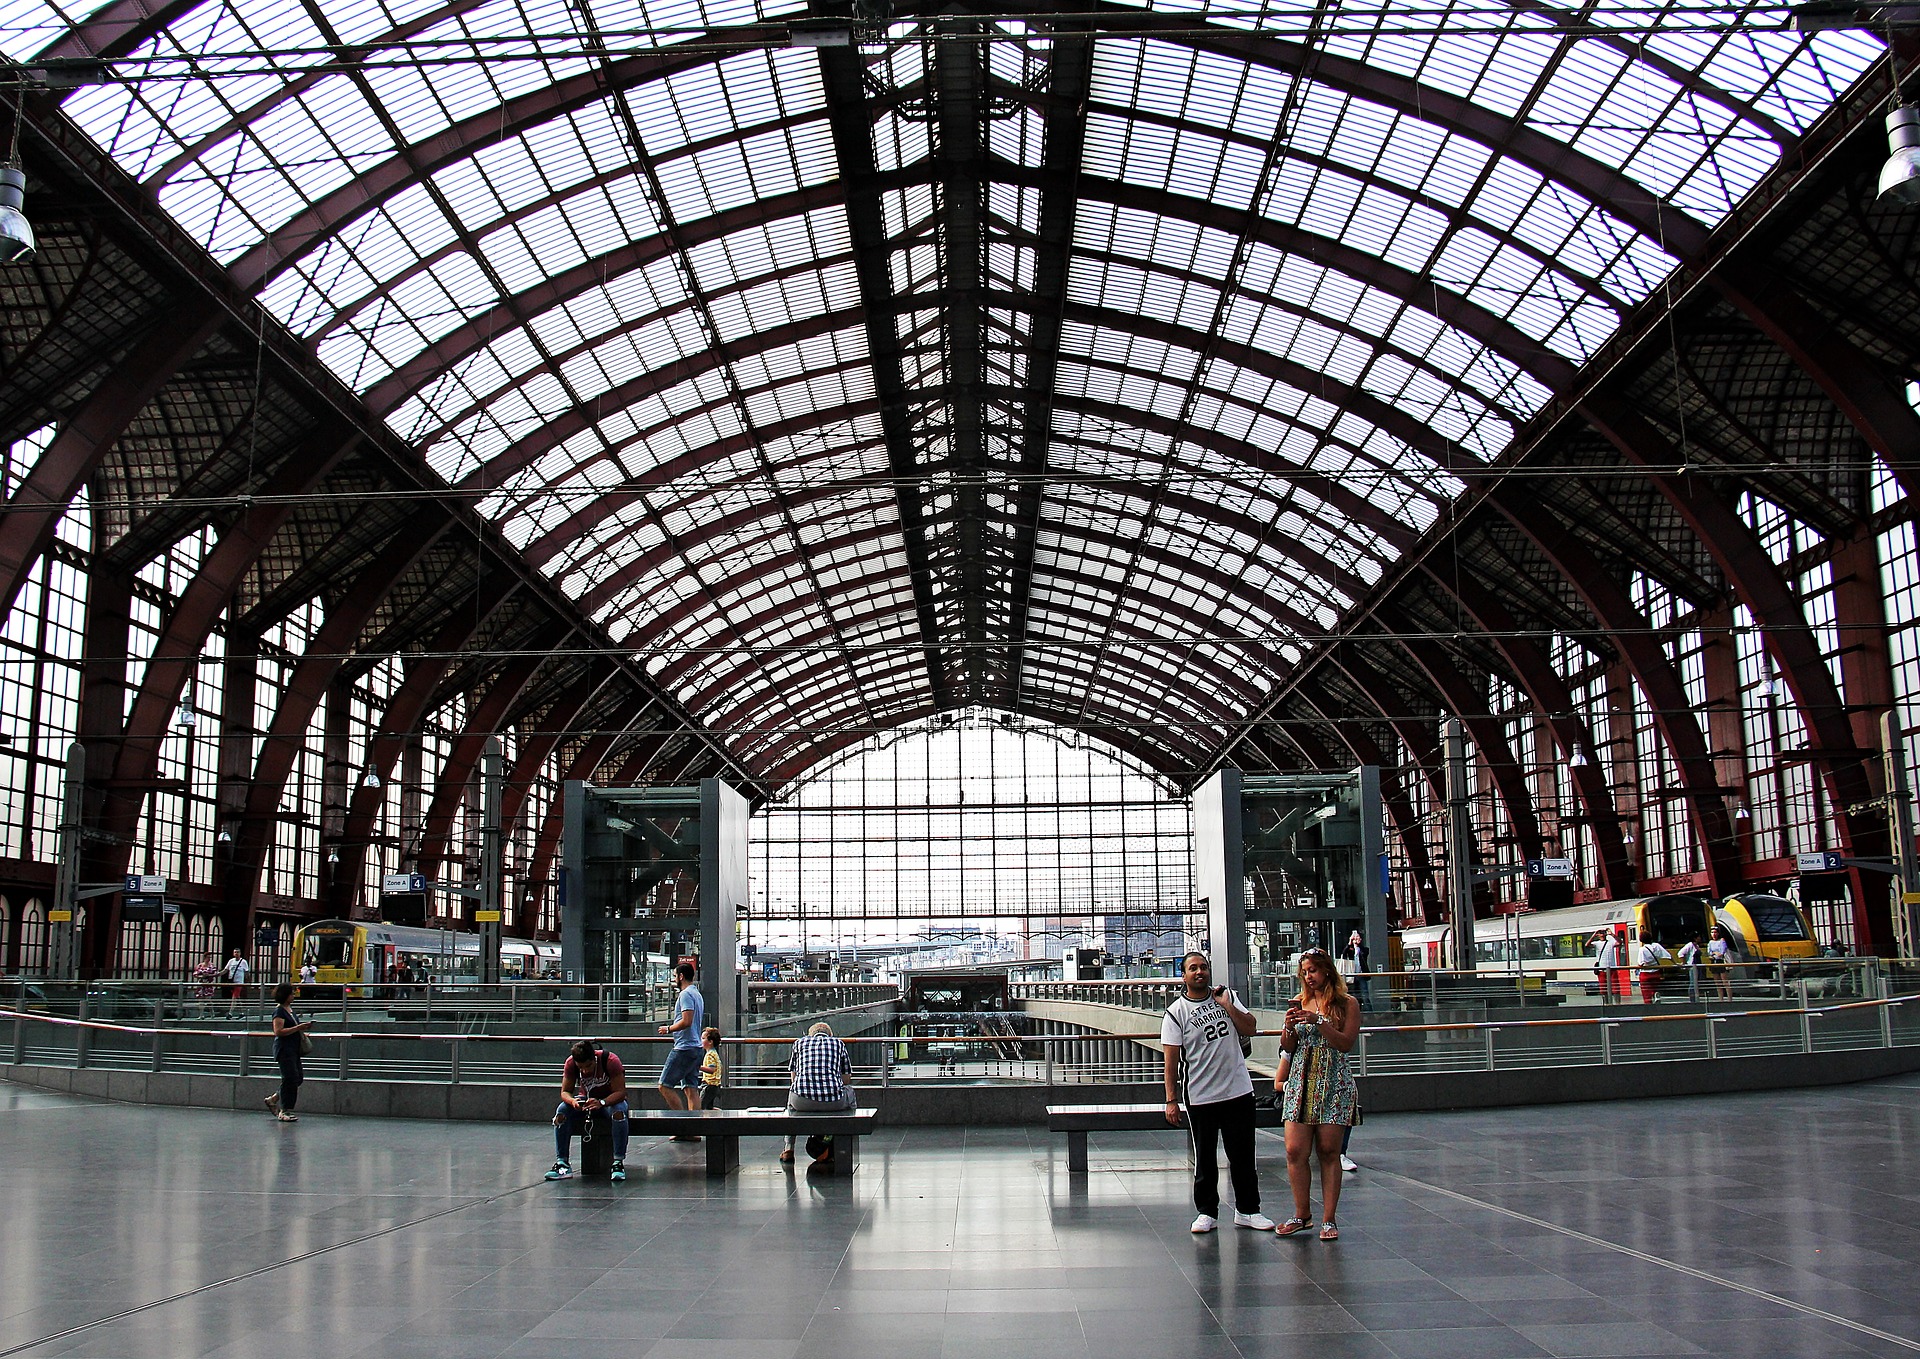 Railway Station, Activity, Architecture, Construction, Human, HQ Photo